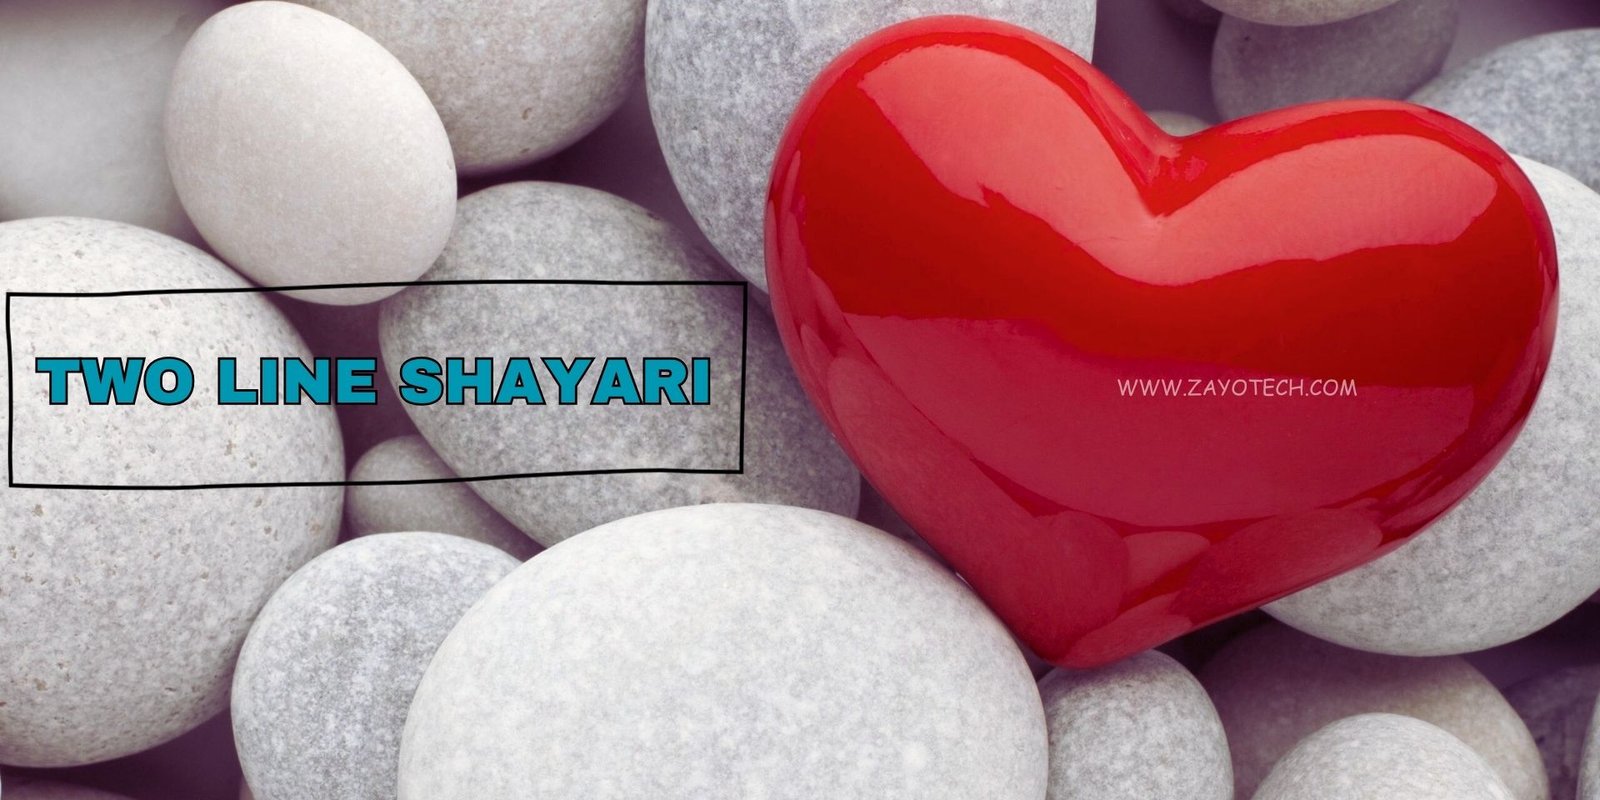 Two Line Shayari